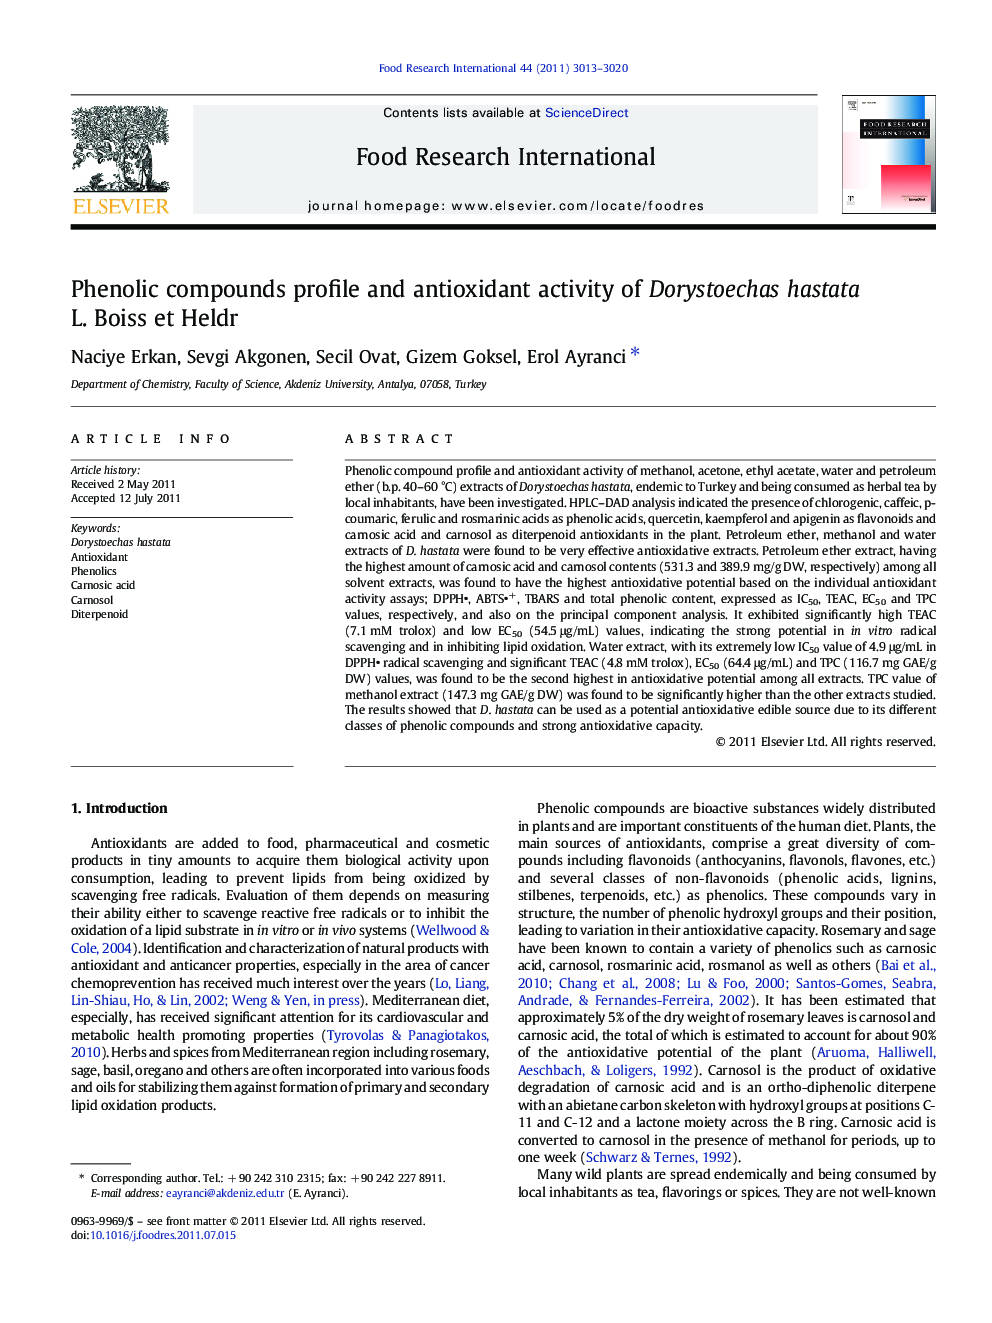 Phenolic compounds profile and antioxidant activity of Dorystoechas hastata L. Boiss et Heldr